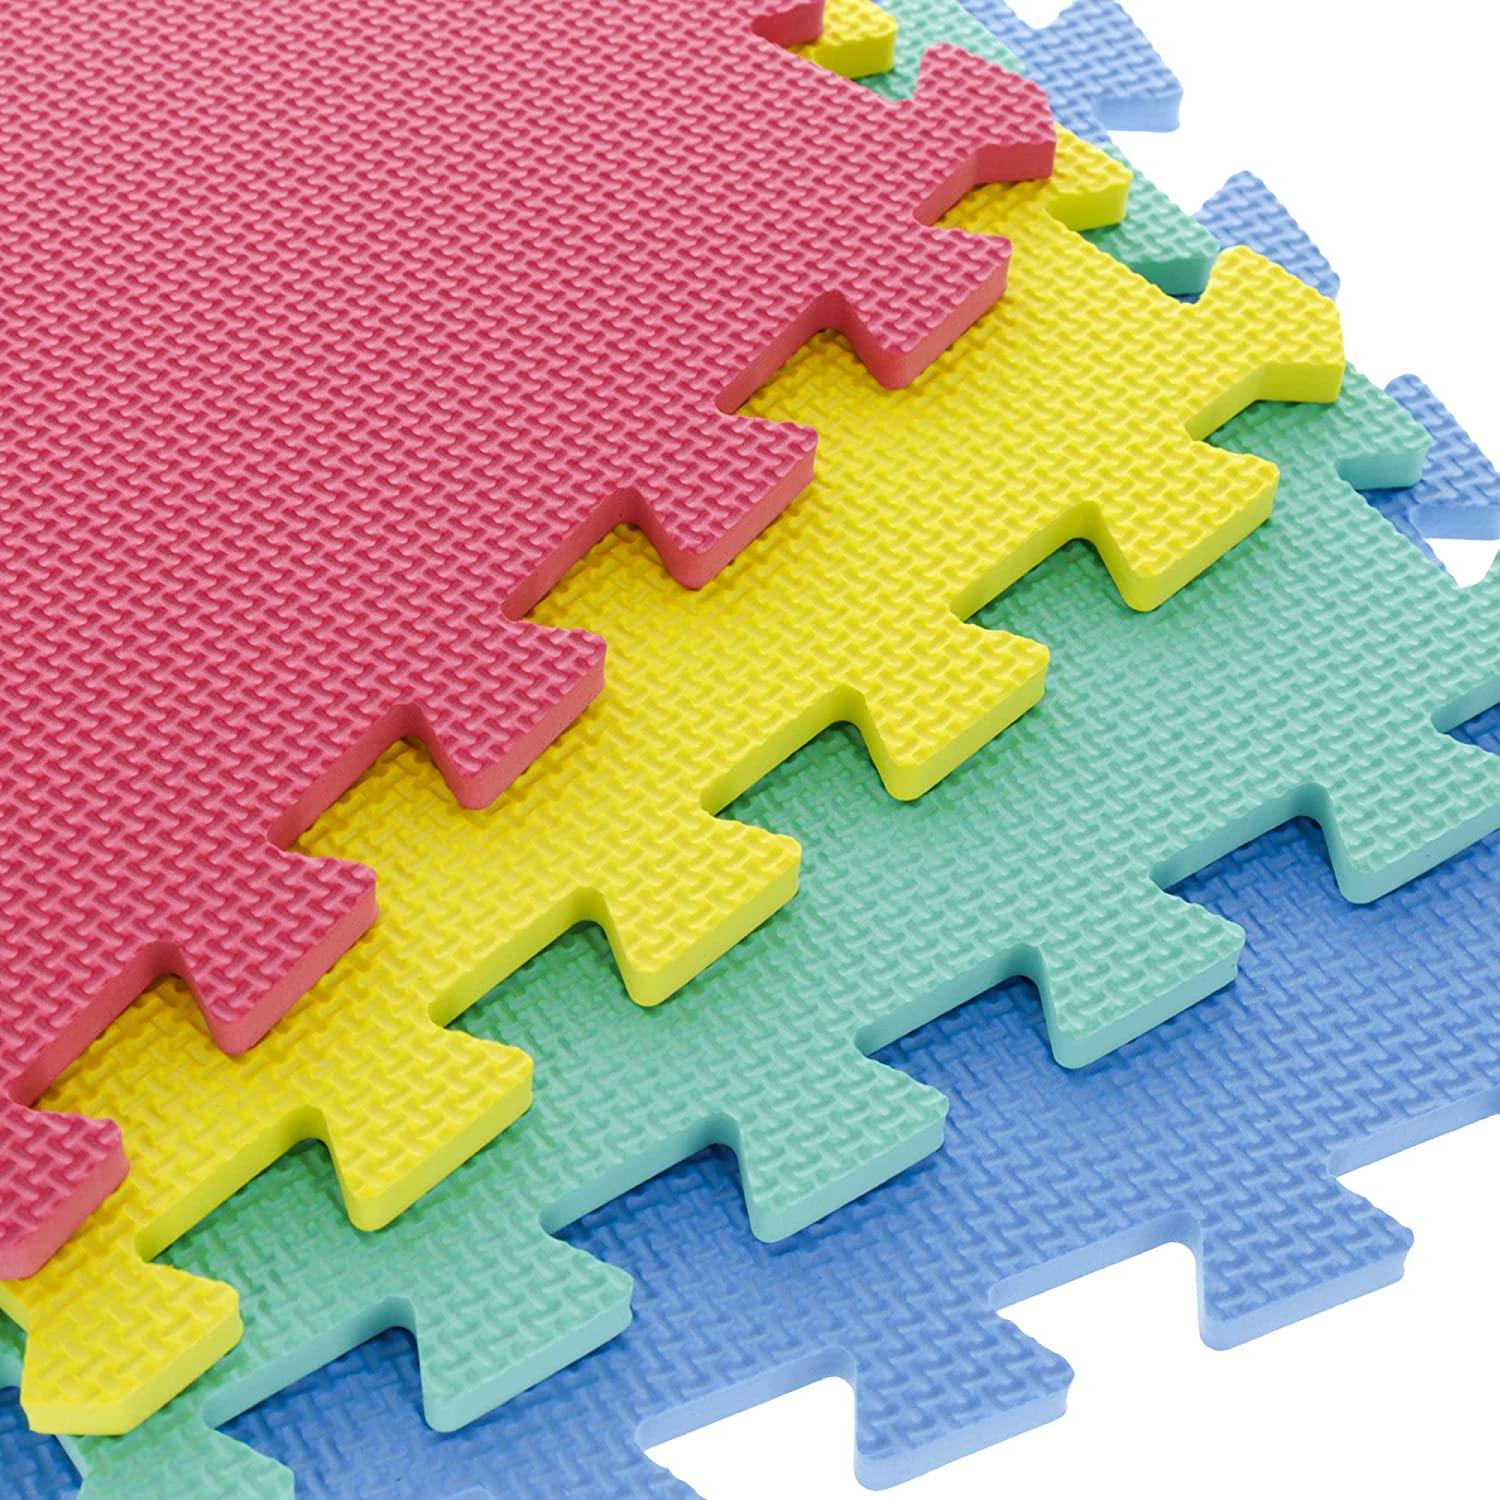 Stalwart Foam Mat Floor Tiles, Interlocking Ultimate Comfort EVA